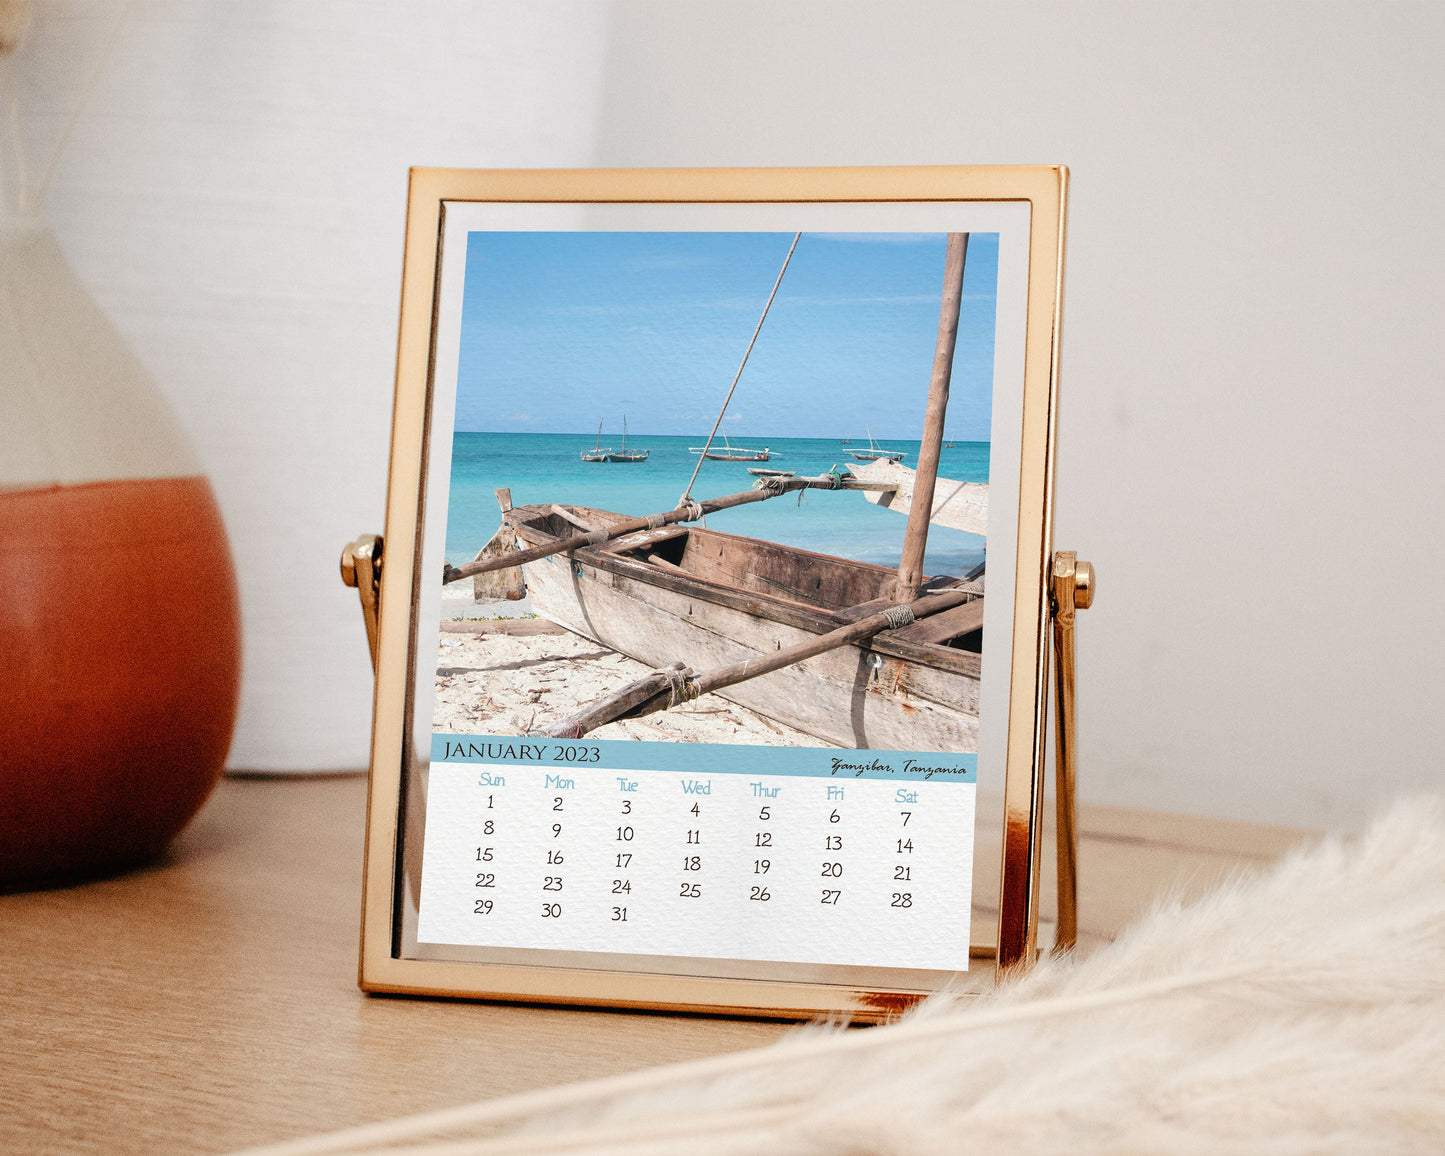 2023 Photo Calendar - Beaches